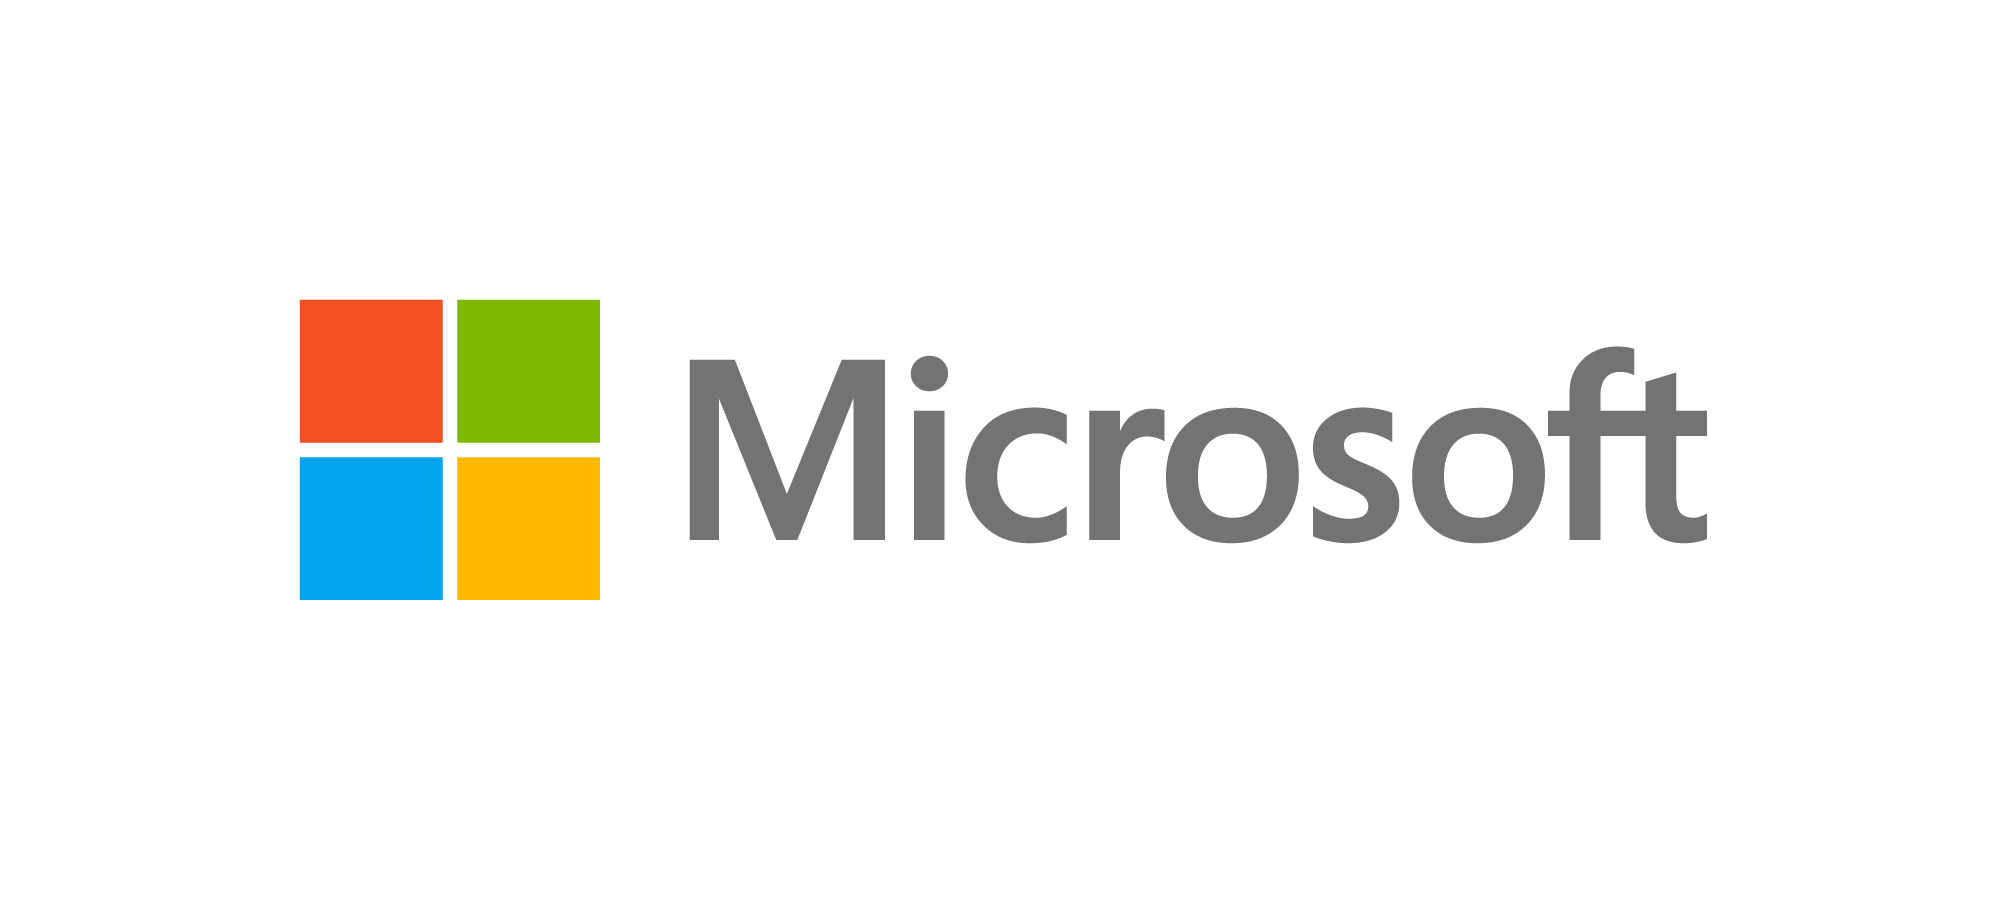 Google Corporate Logo - Microsoft Corporate Logo Guidelines | Trademarks